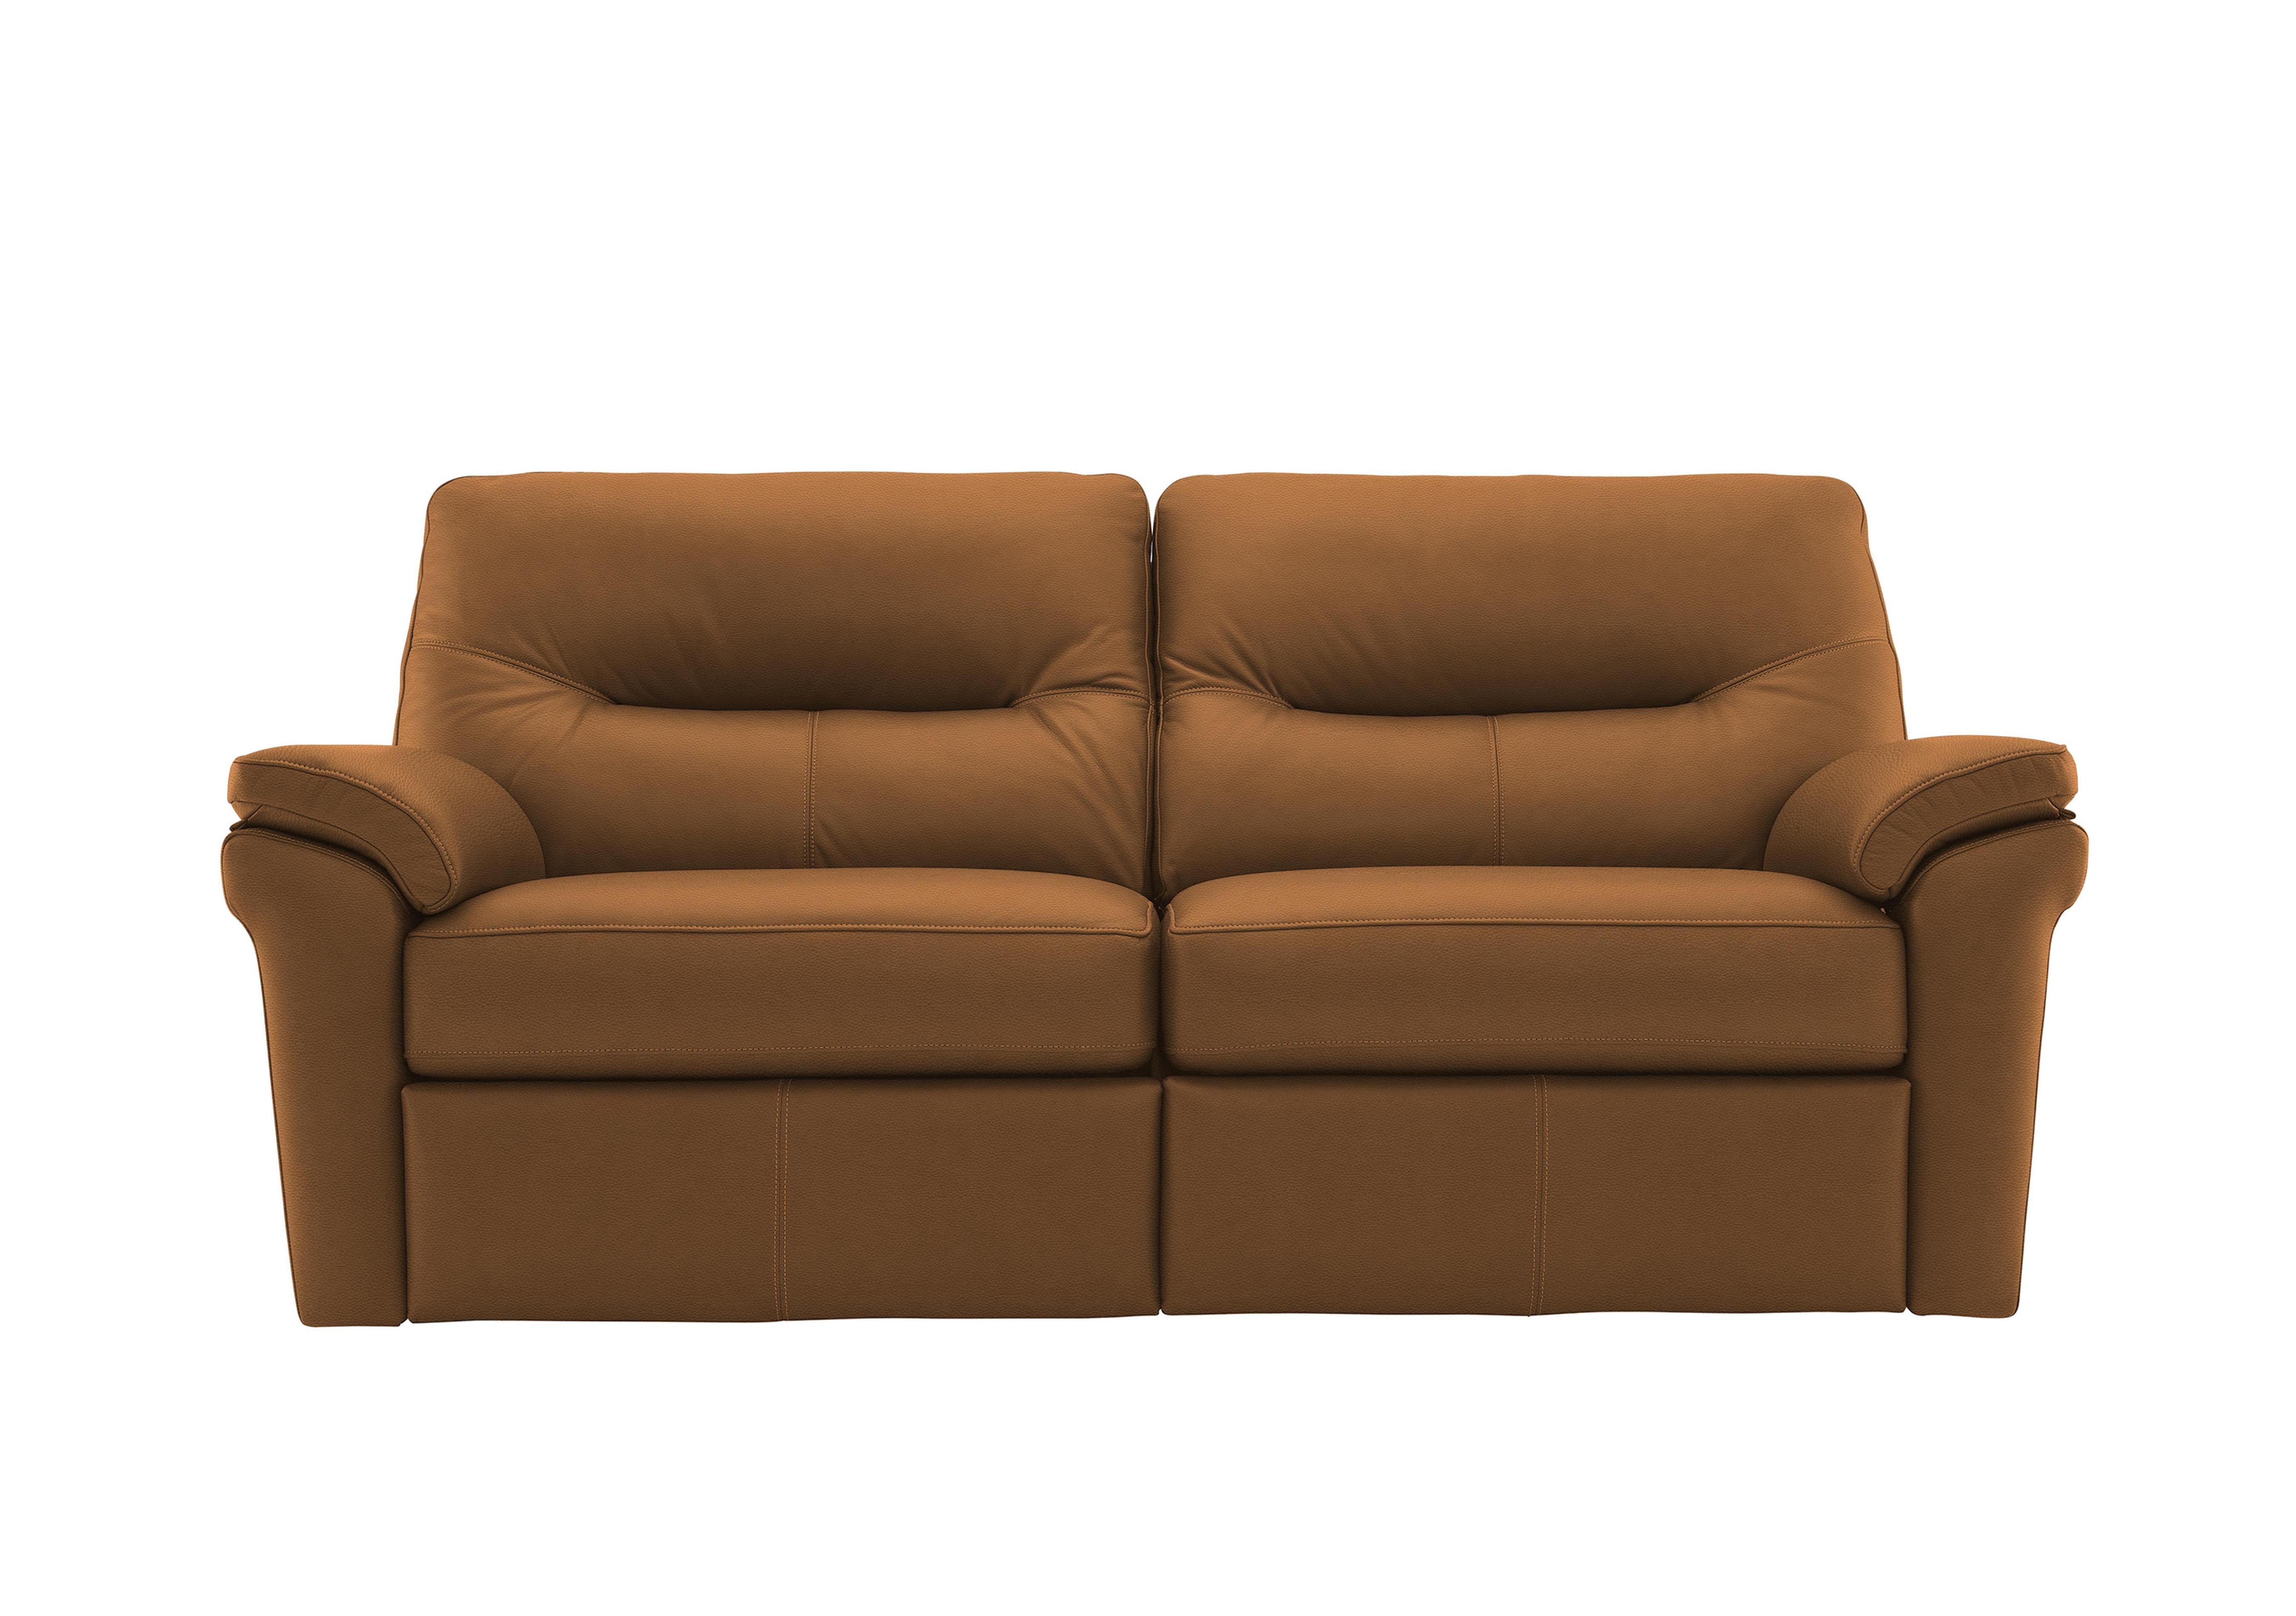 Seattle 3 Seater Leather Sofa in L847 Cambridge Tan on Furniture Village